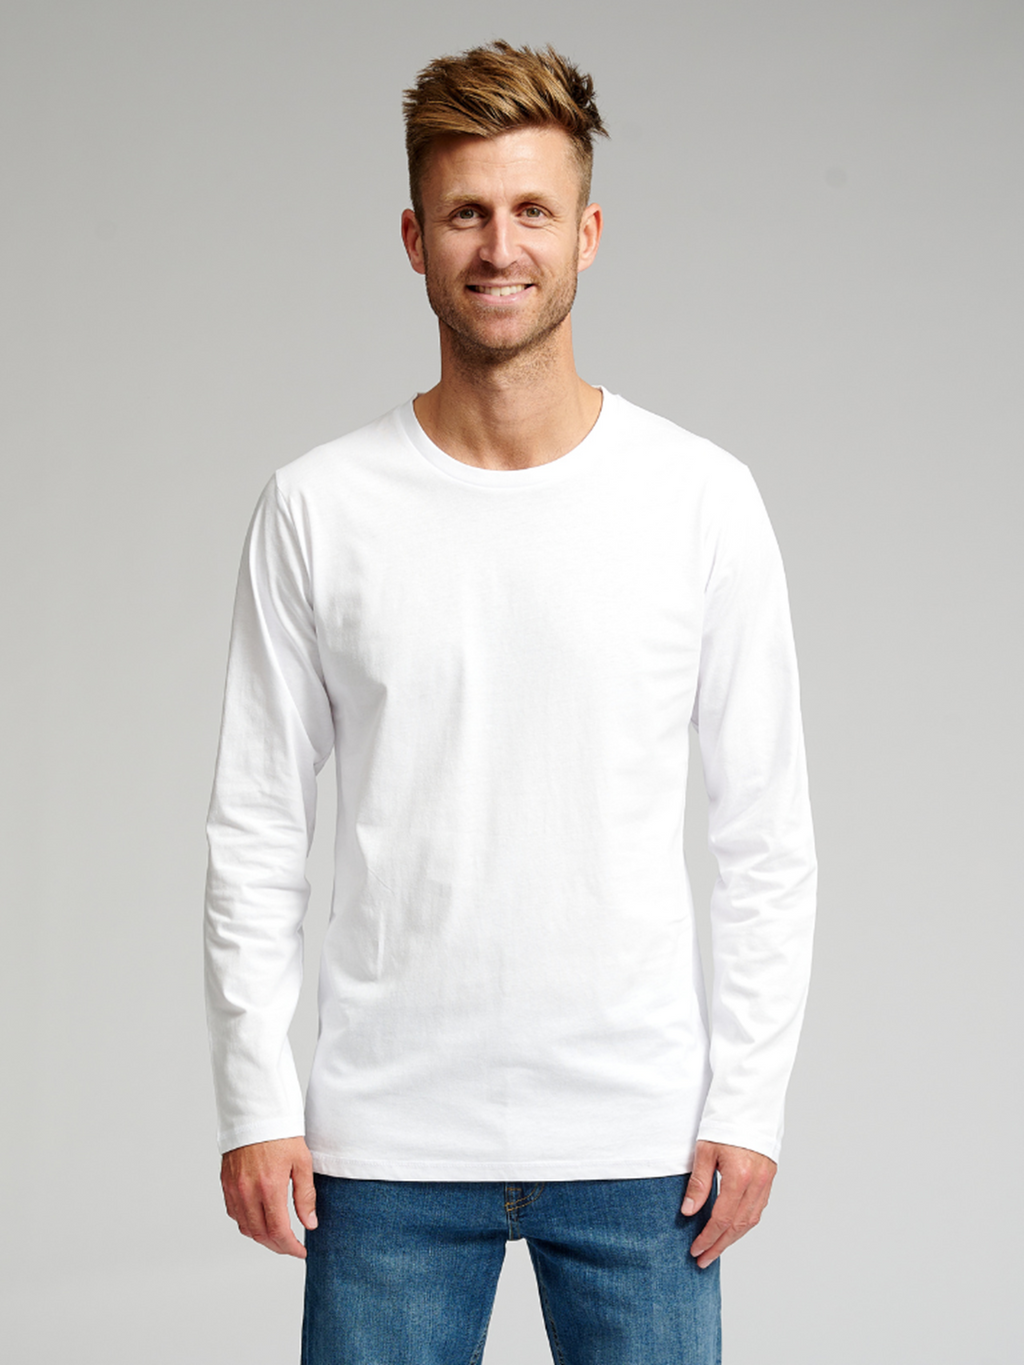 Basic Long Sleeve T-Shirt - Package Deal (3 pcs.)